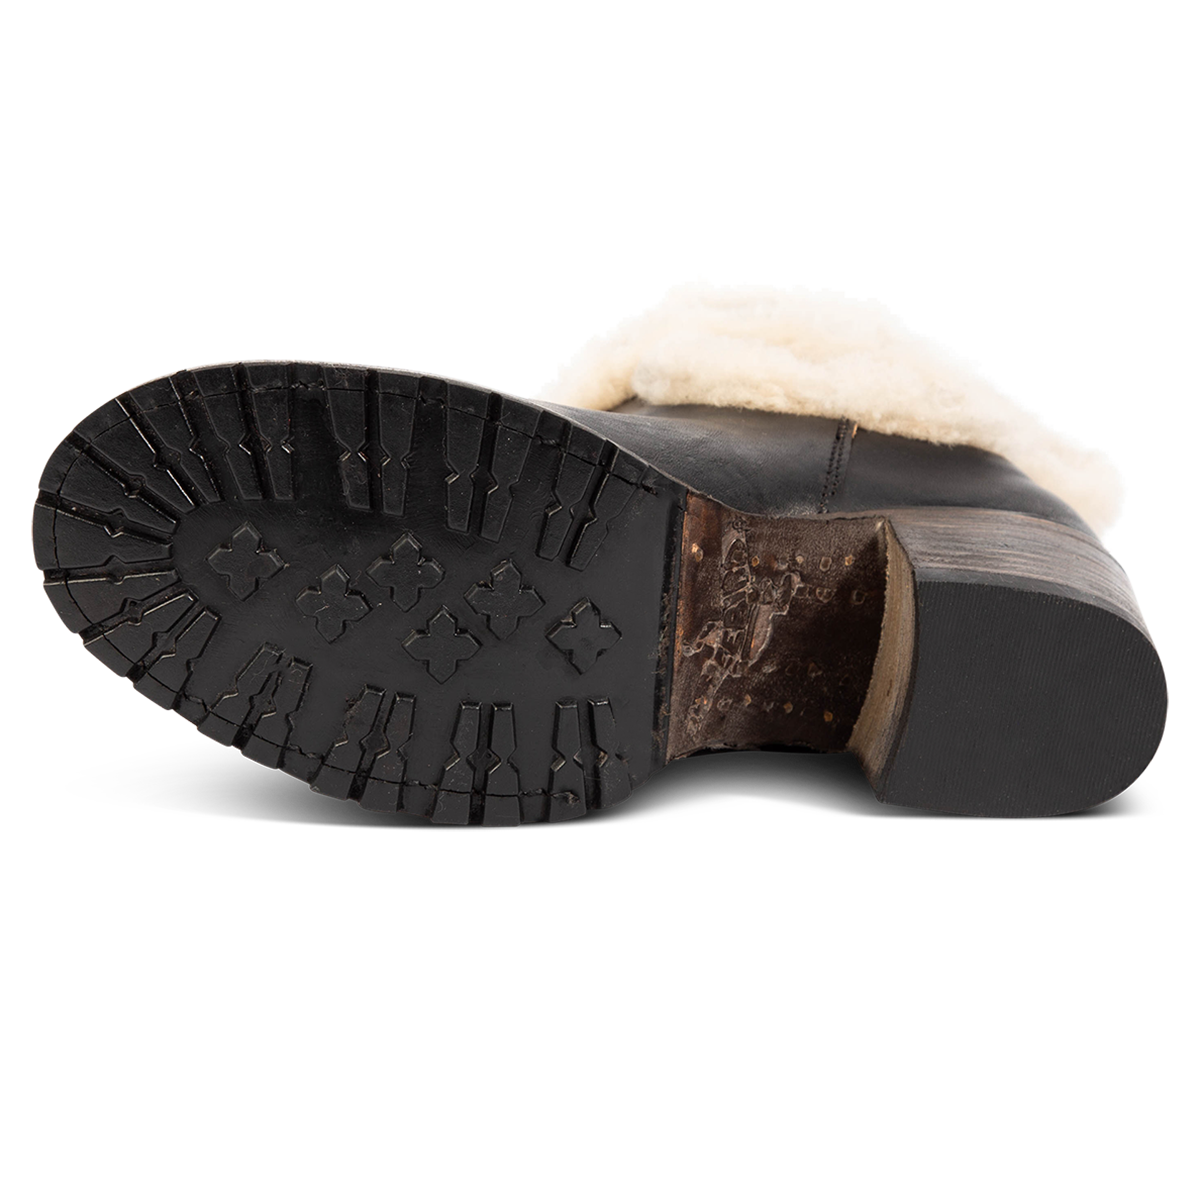 Rubber tread sole on FREEBIRD women's Neverland black leather bootie